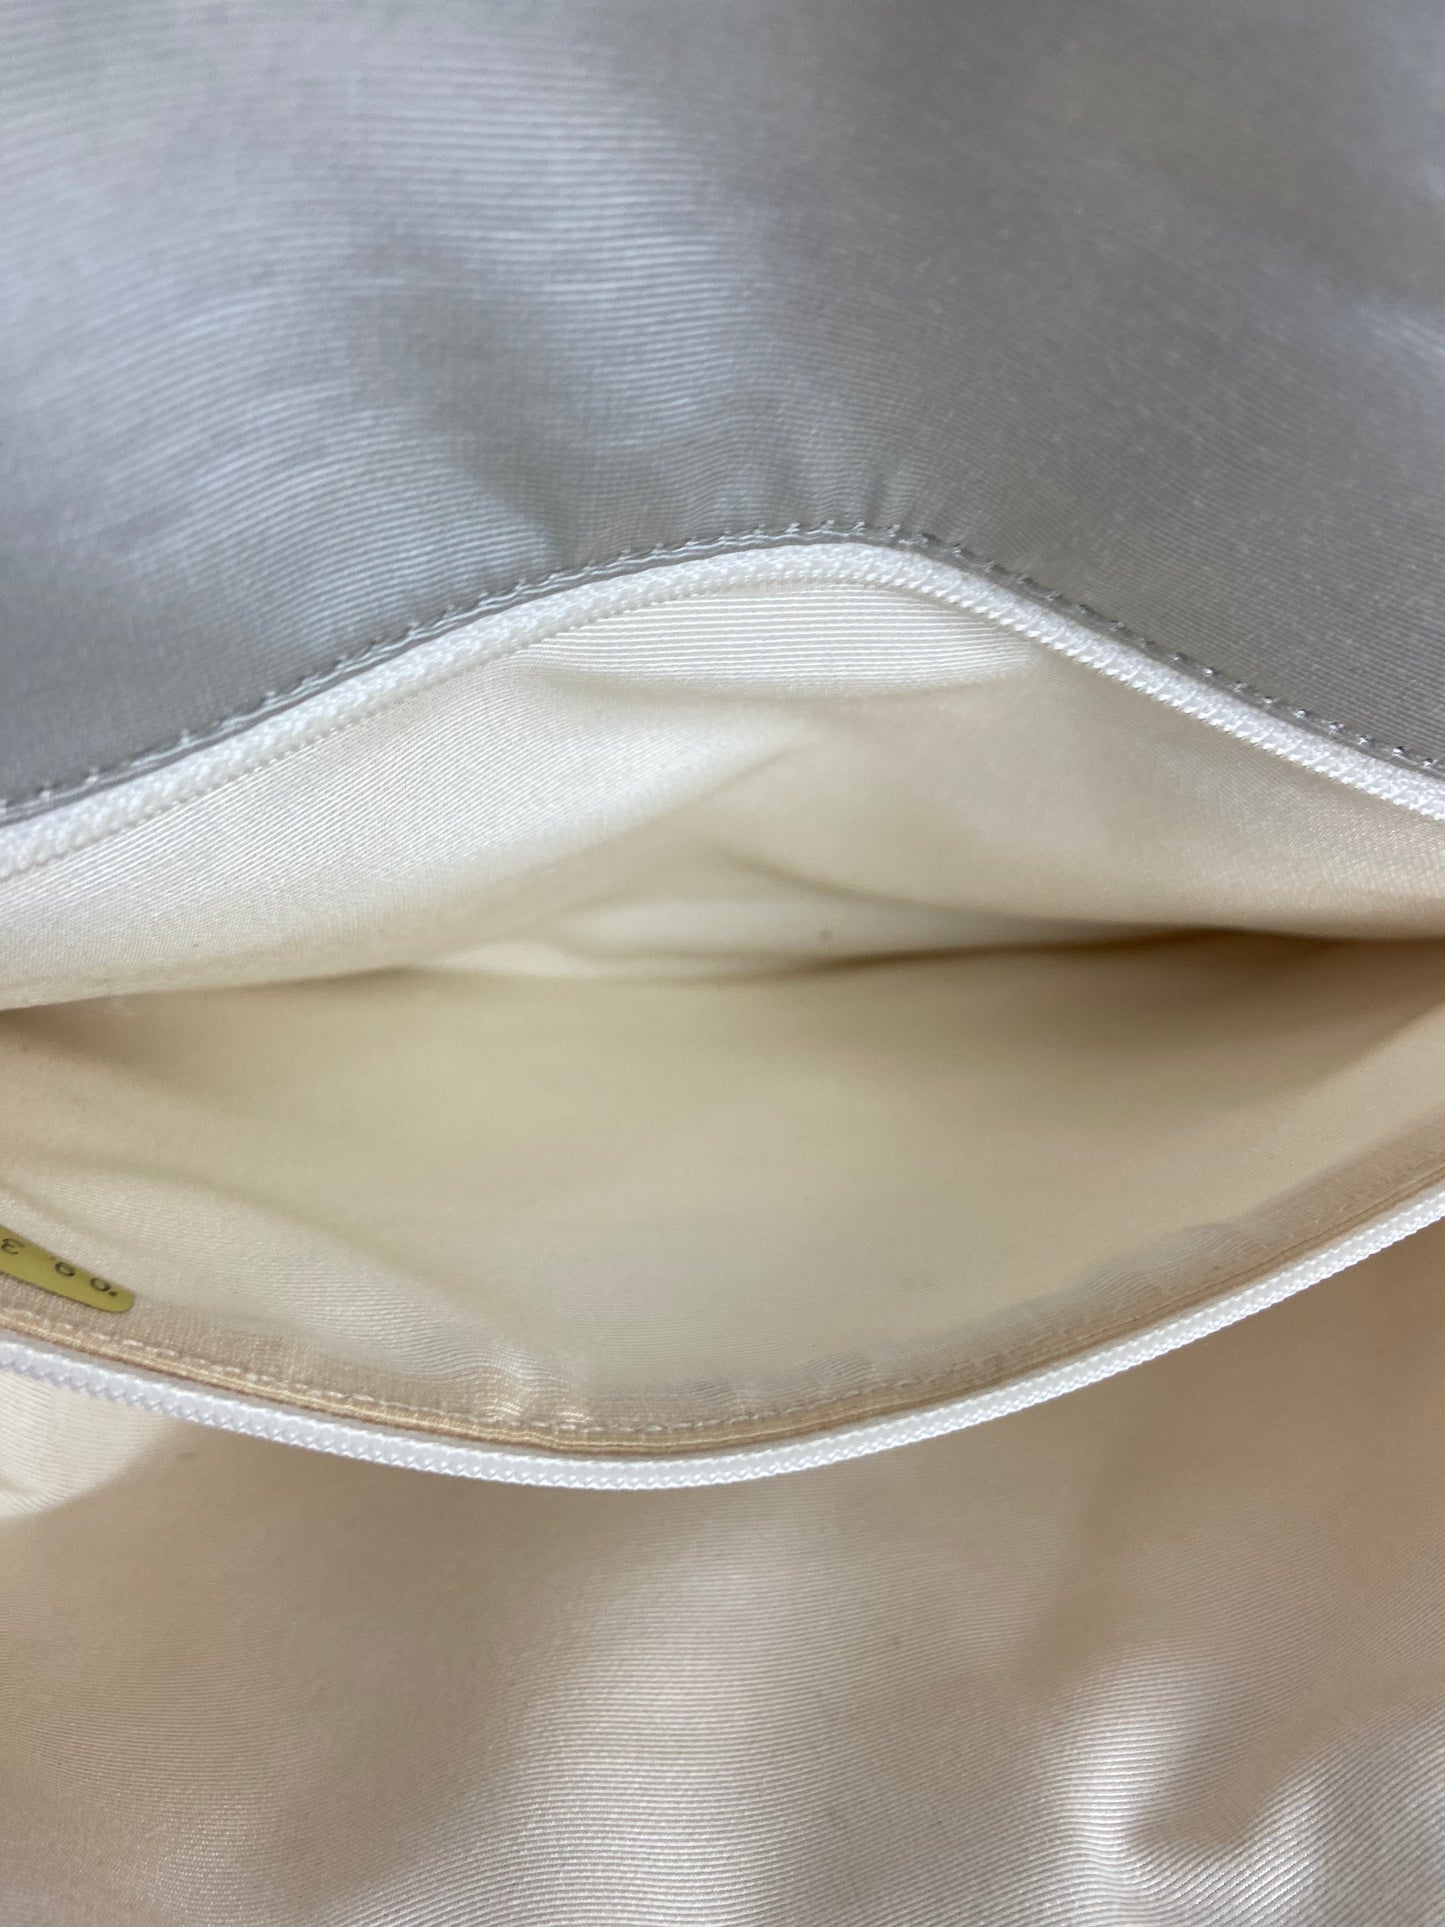 Chanel Tricolor Fabric Reissue Flap Bag